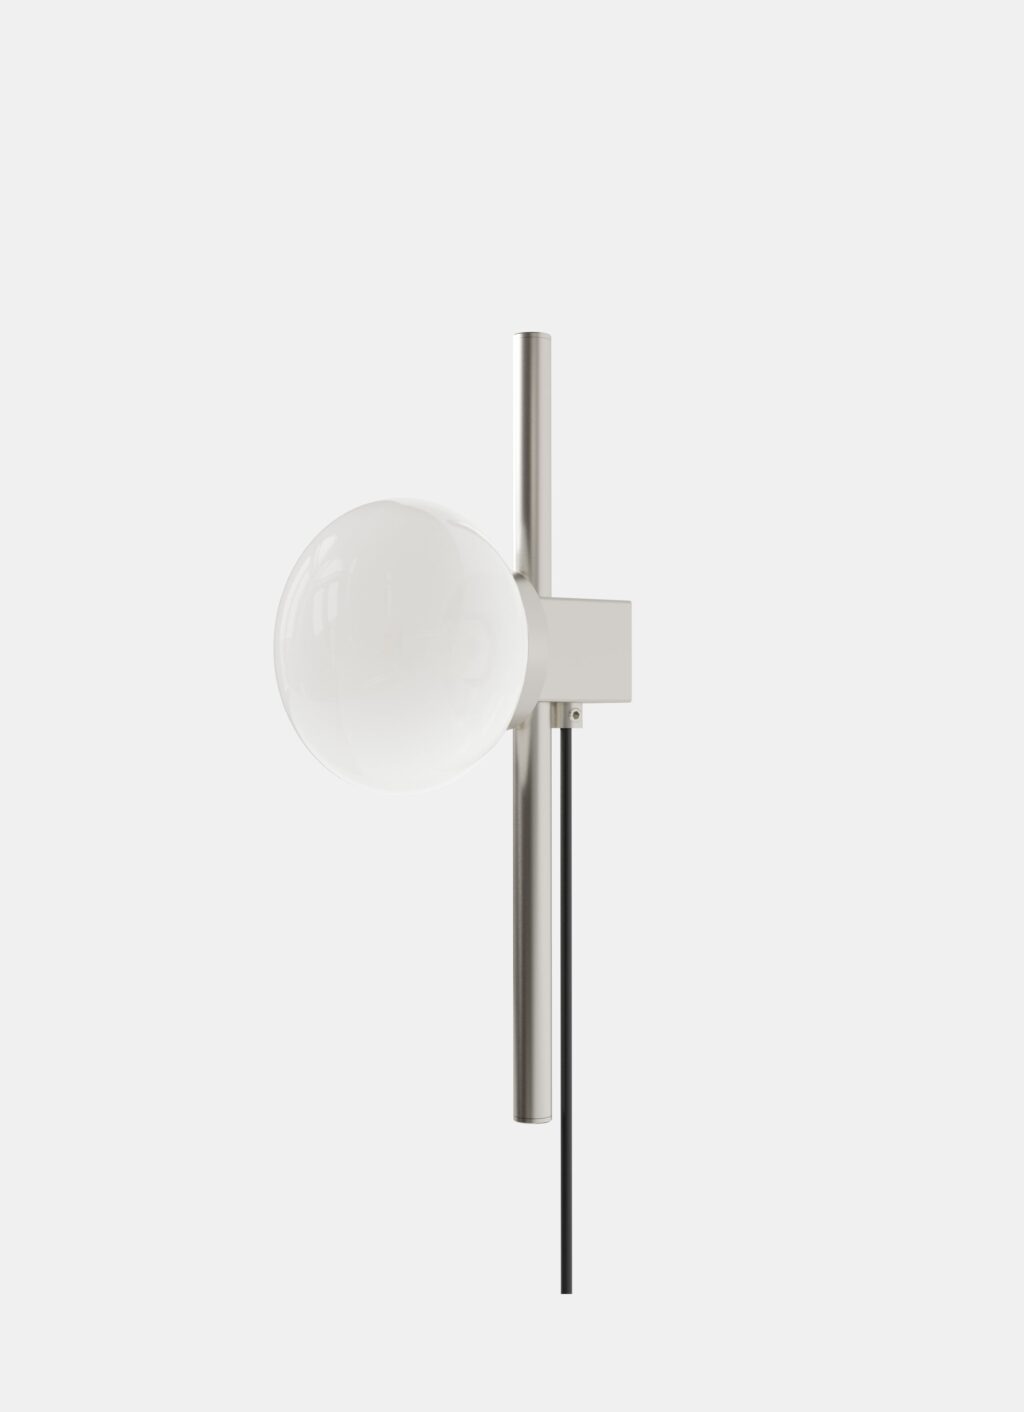 Frama - Ovoid Wall Lamp - Stainless Steel - Single